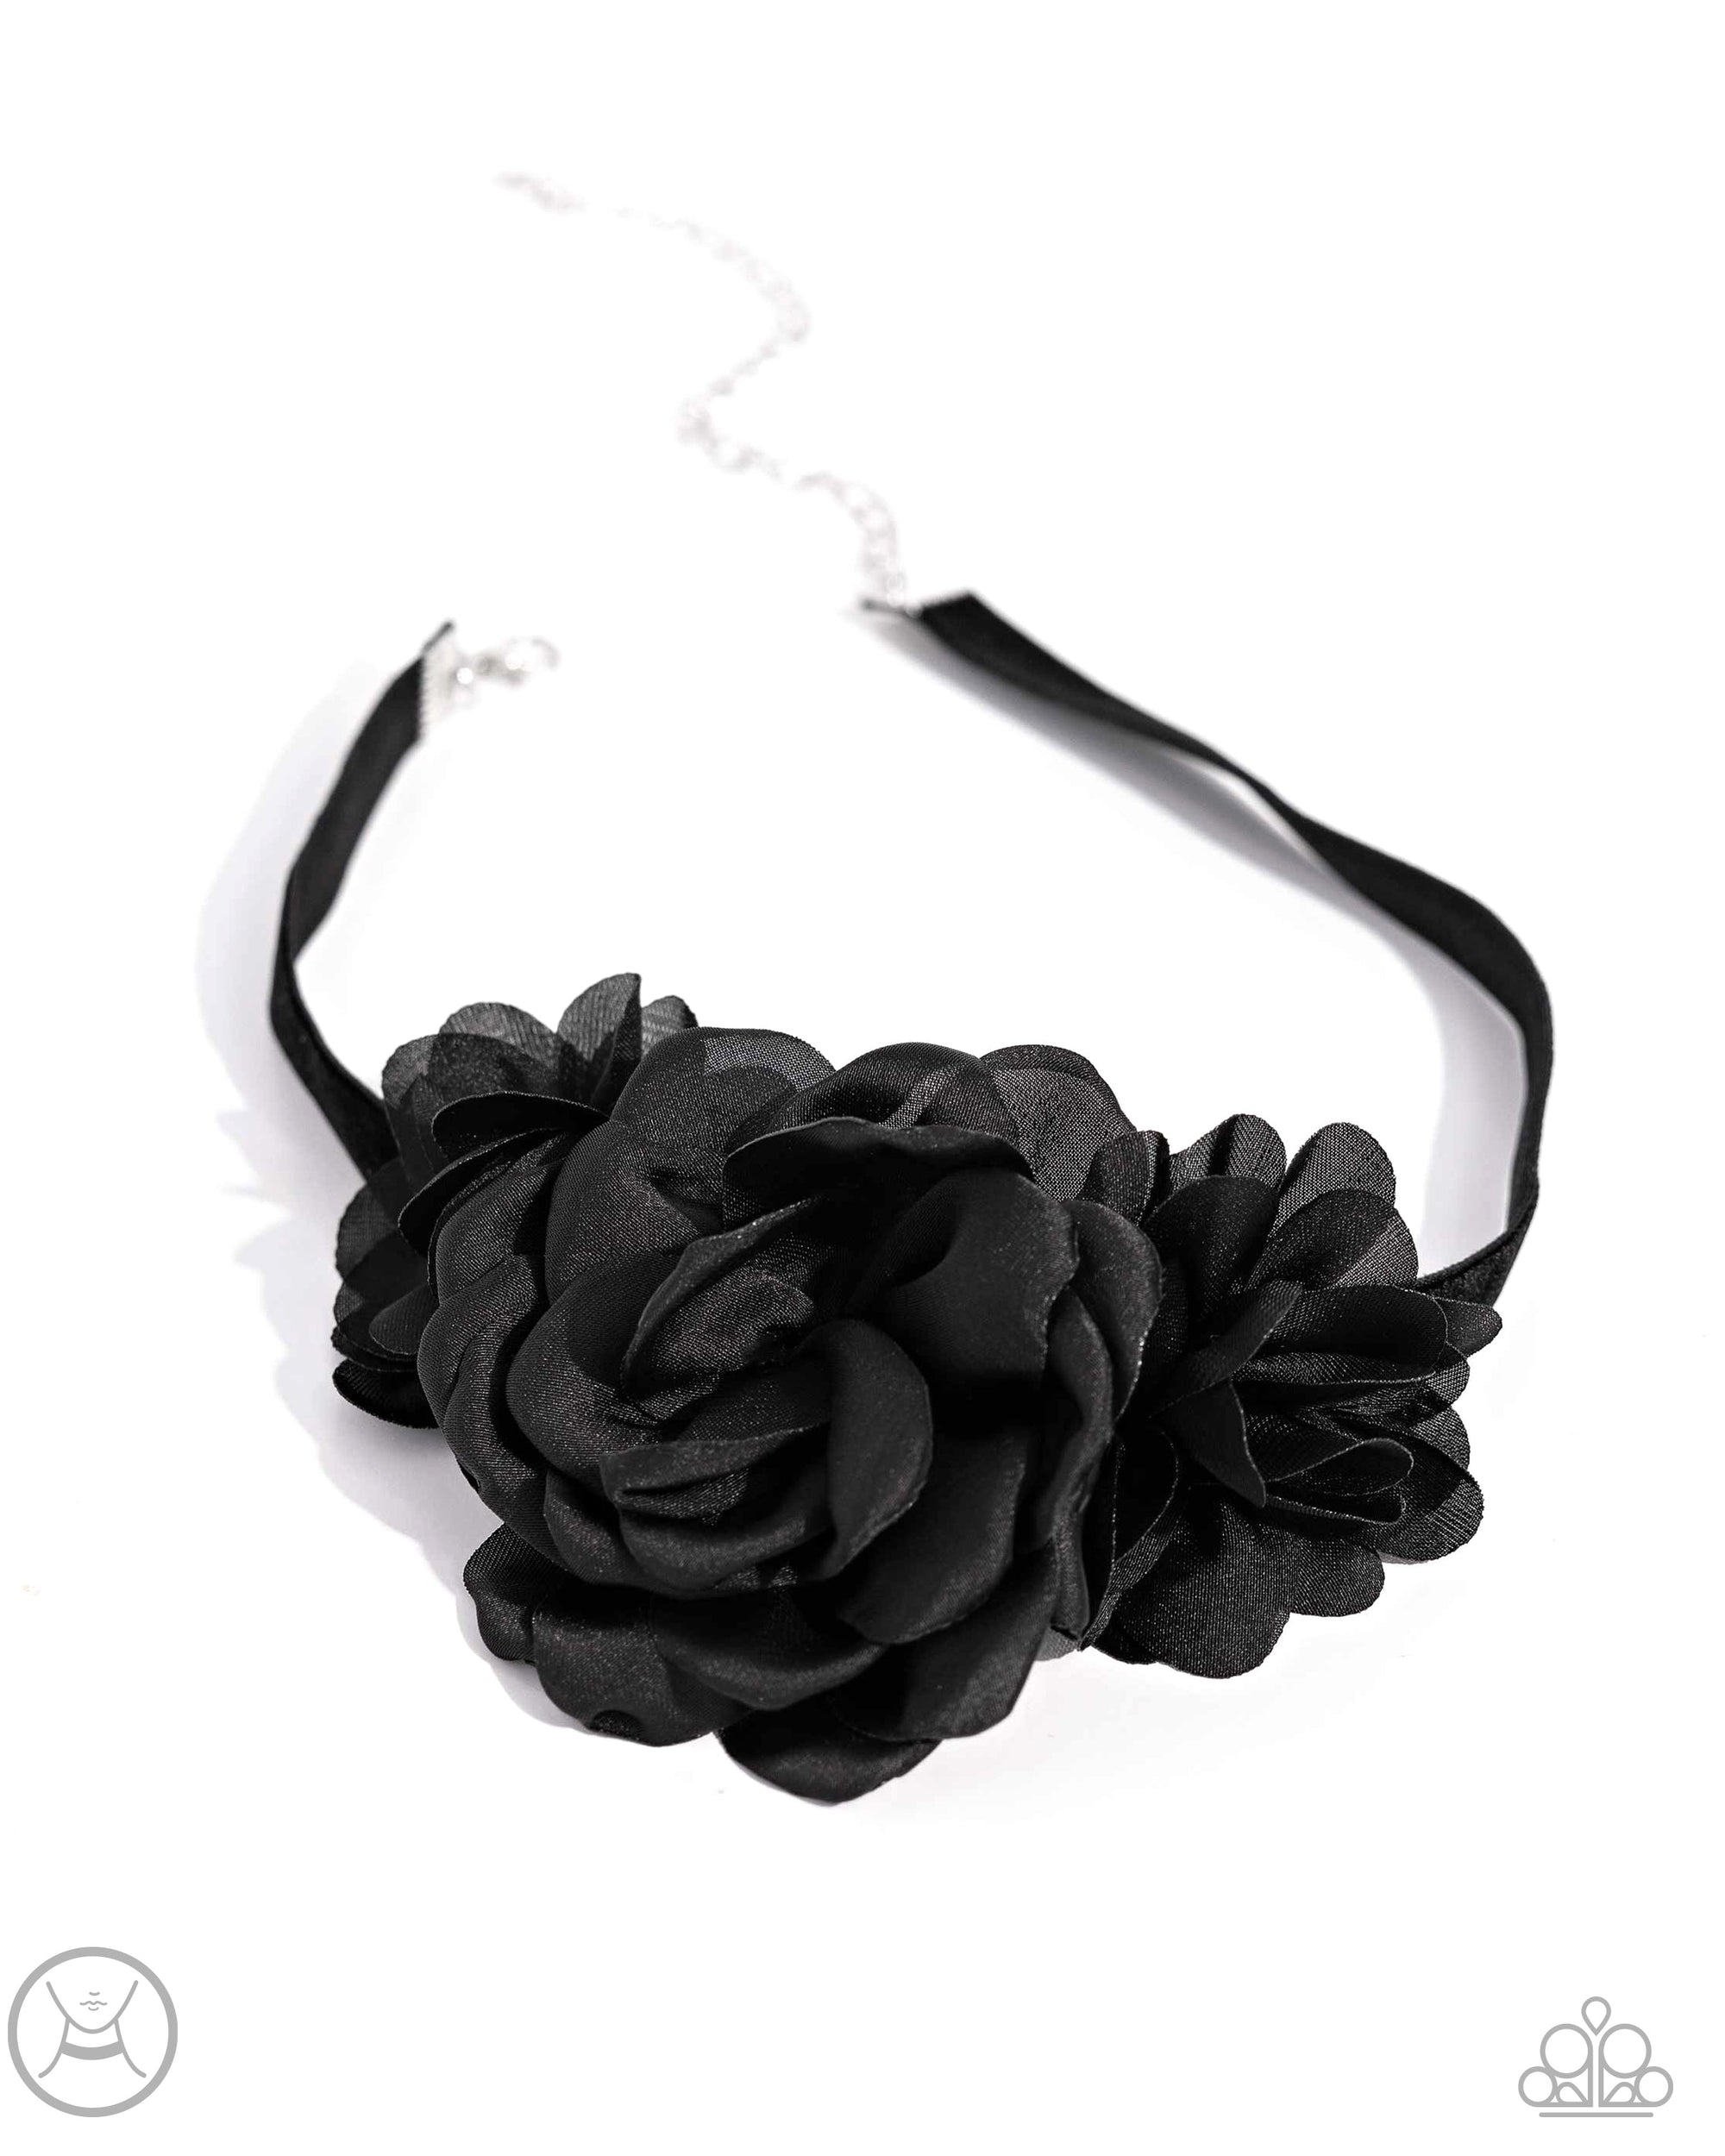 Very Viscountess Black Rose Choker Necklace - Paparazzi Accessories- lightbox - CarasShop.com - $5 Jewelry by Cara Jewels